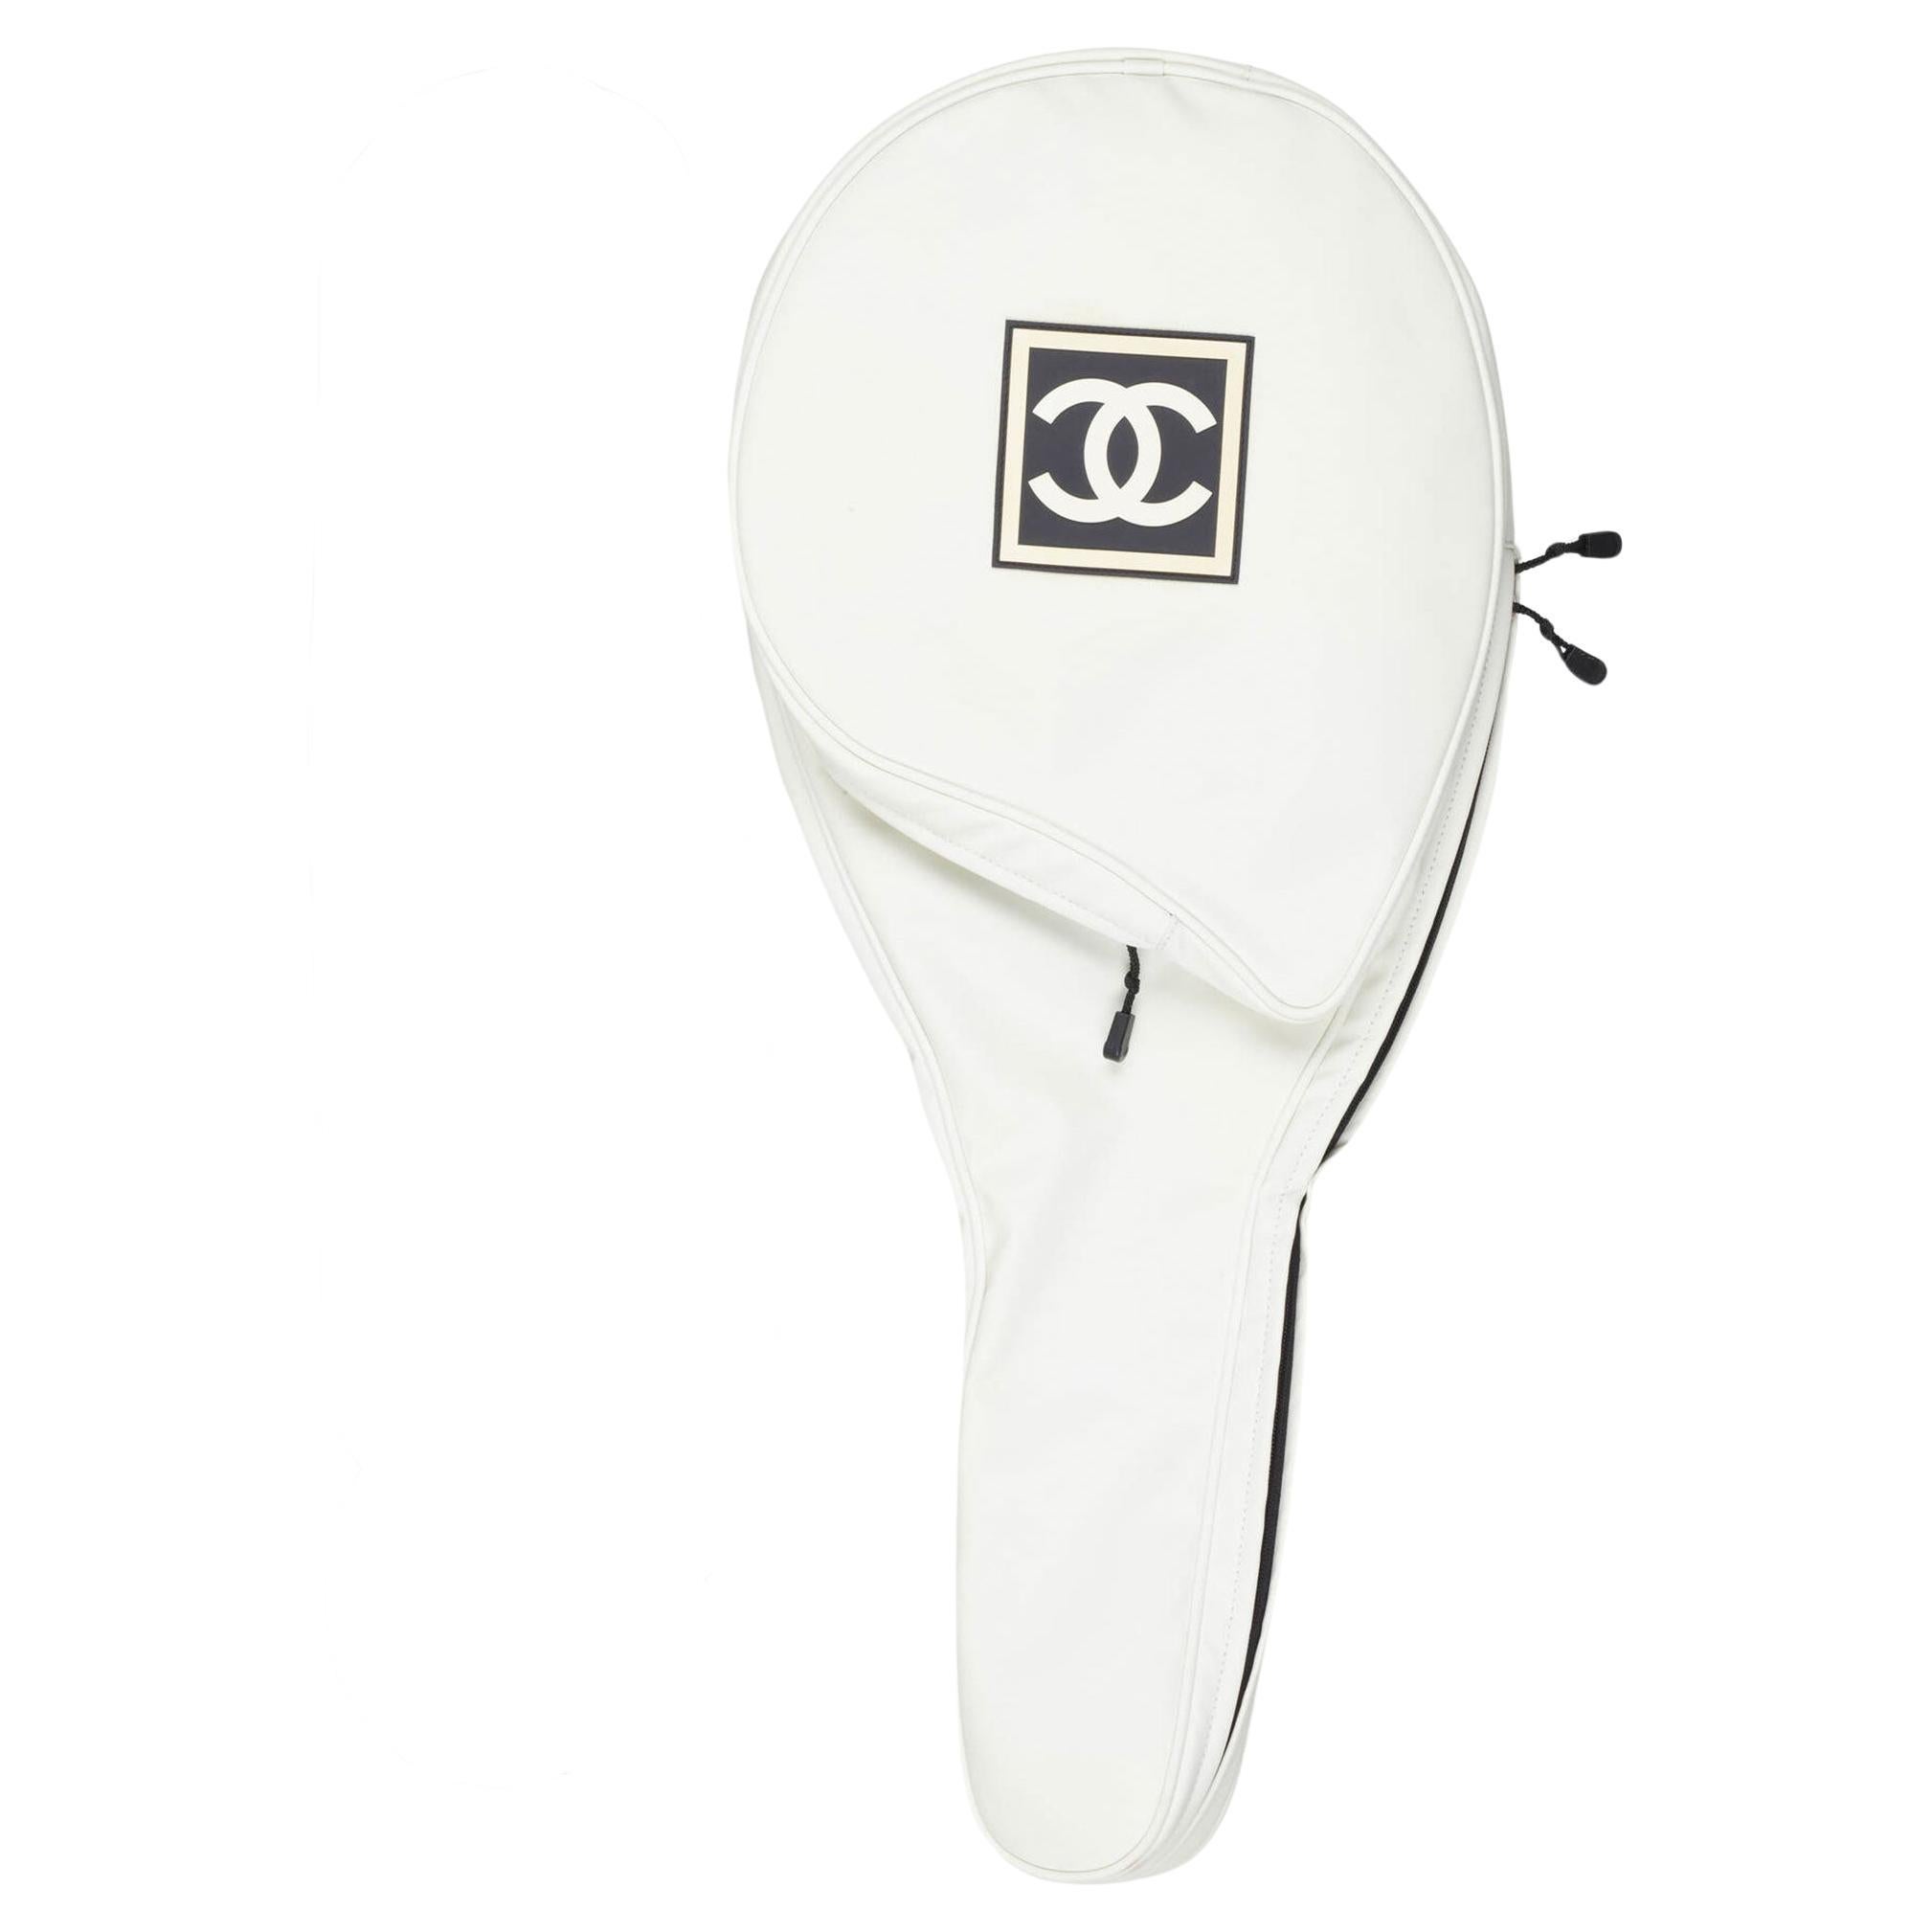 Chanel Canvas Tennis Racquet Cover White Nylon Sport Bag